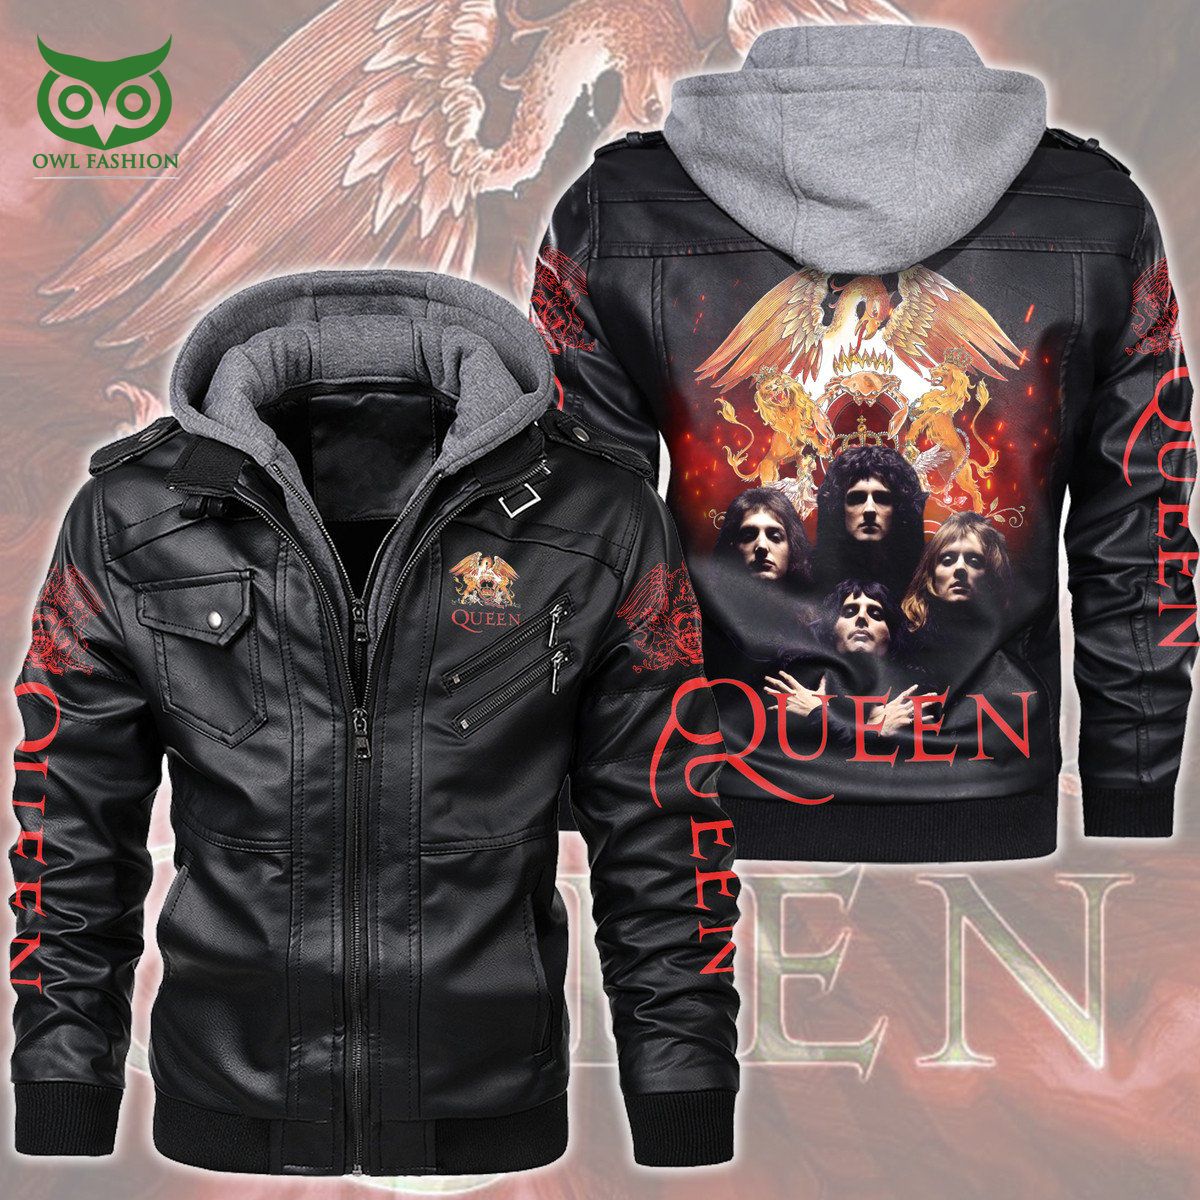 Queen Rock Band Members 2D Leather Jacket Studious look